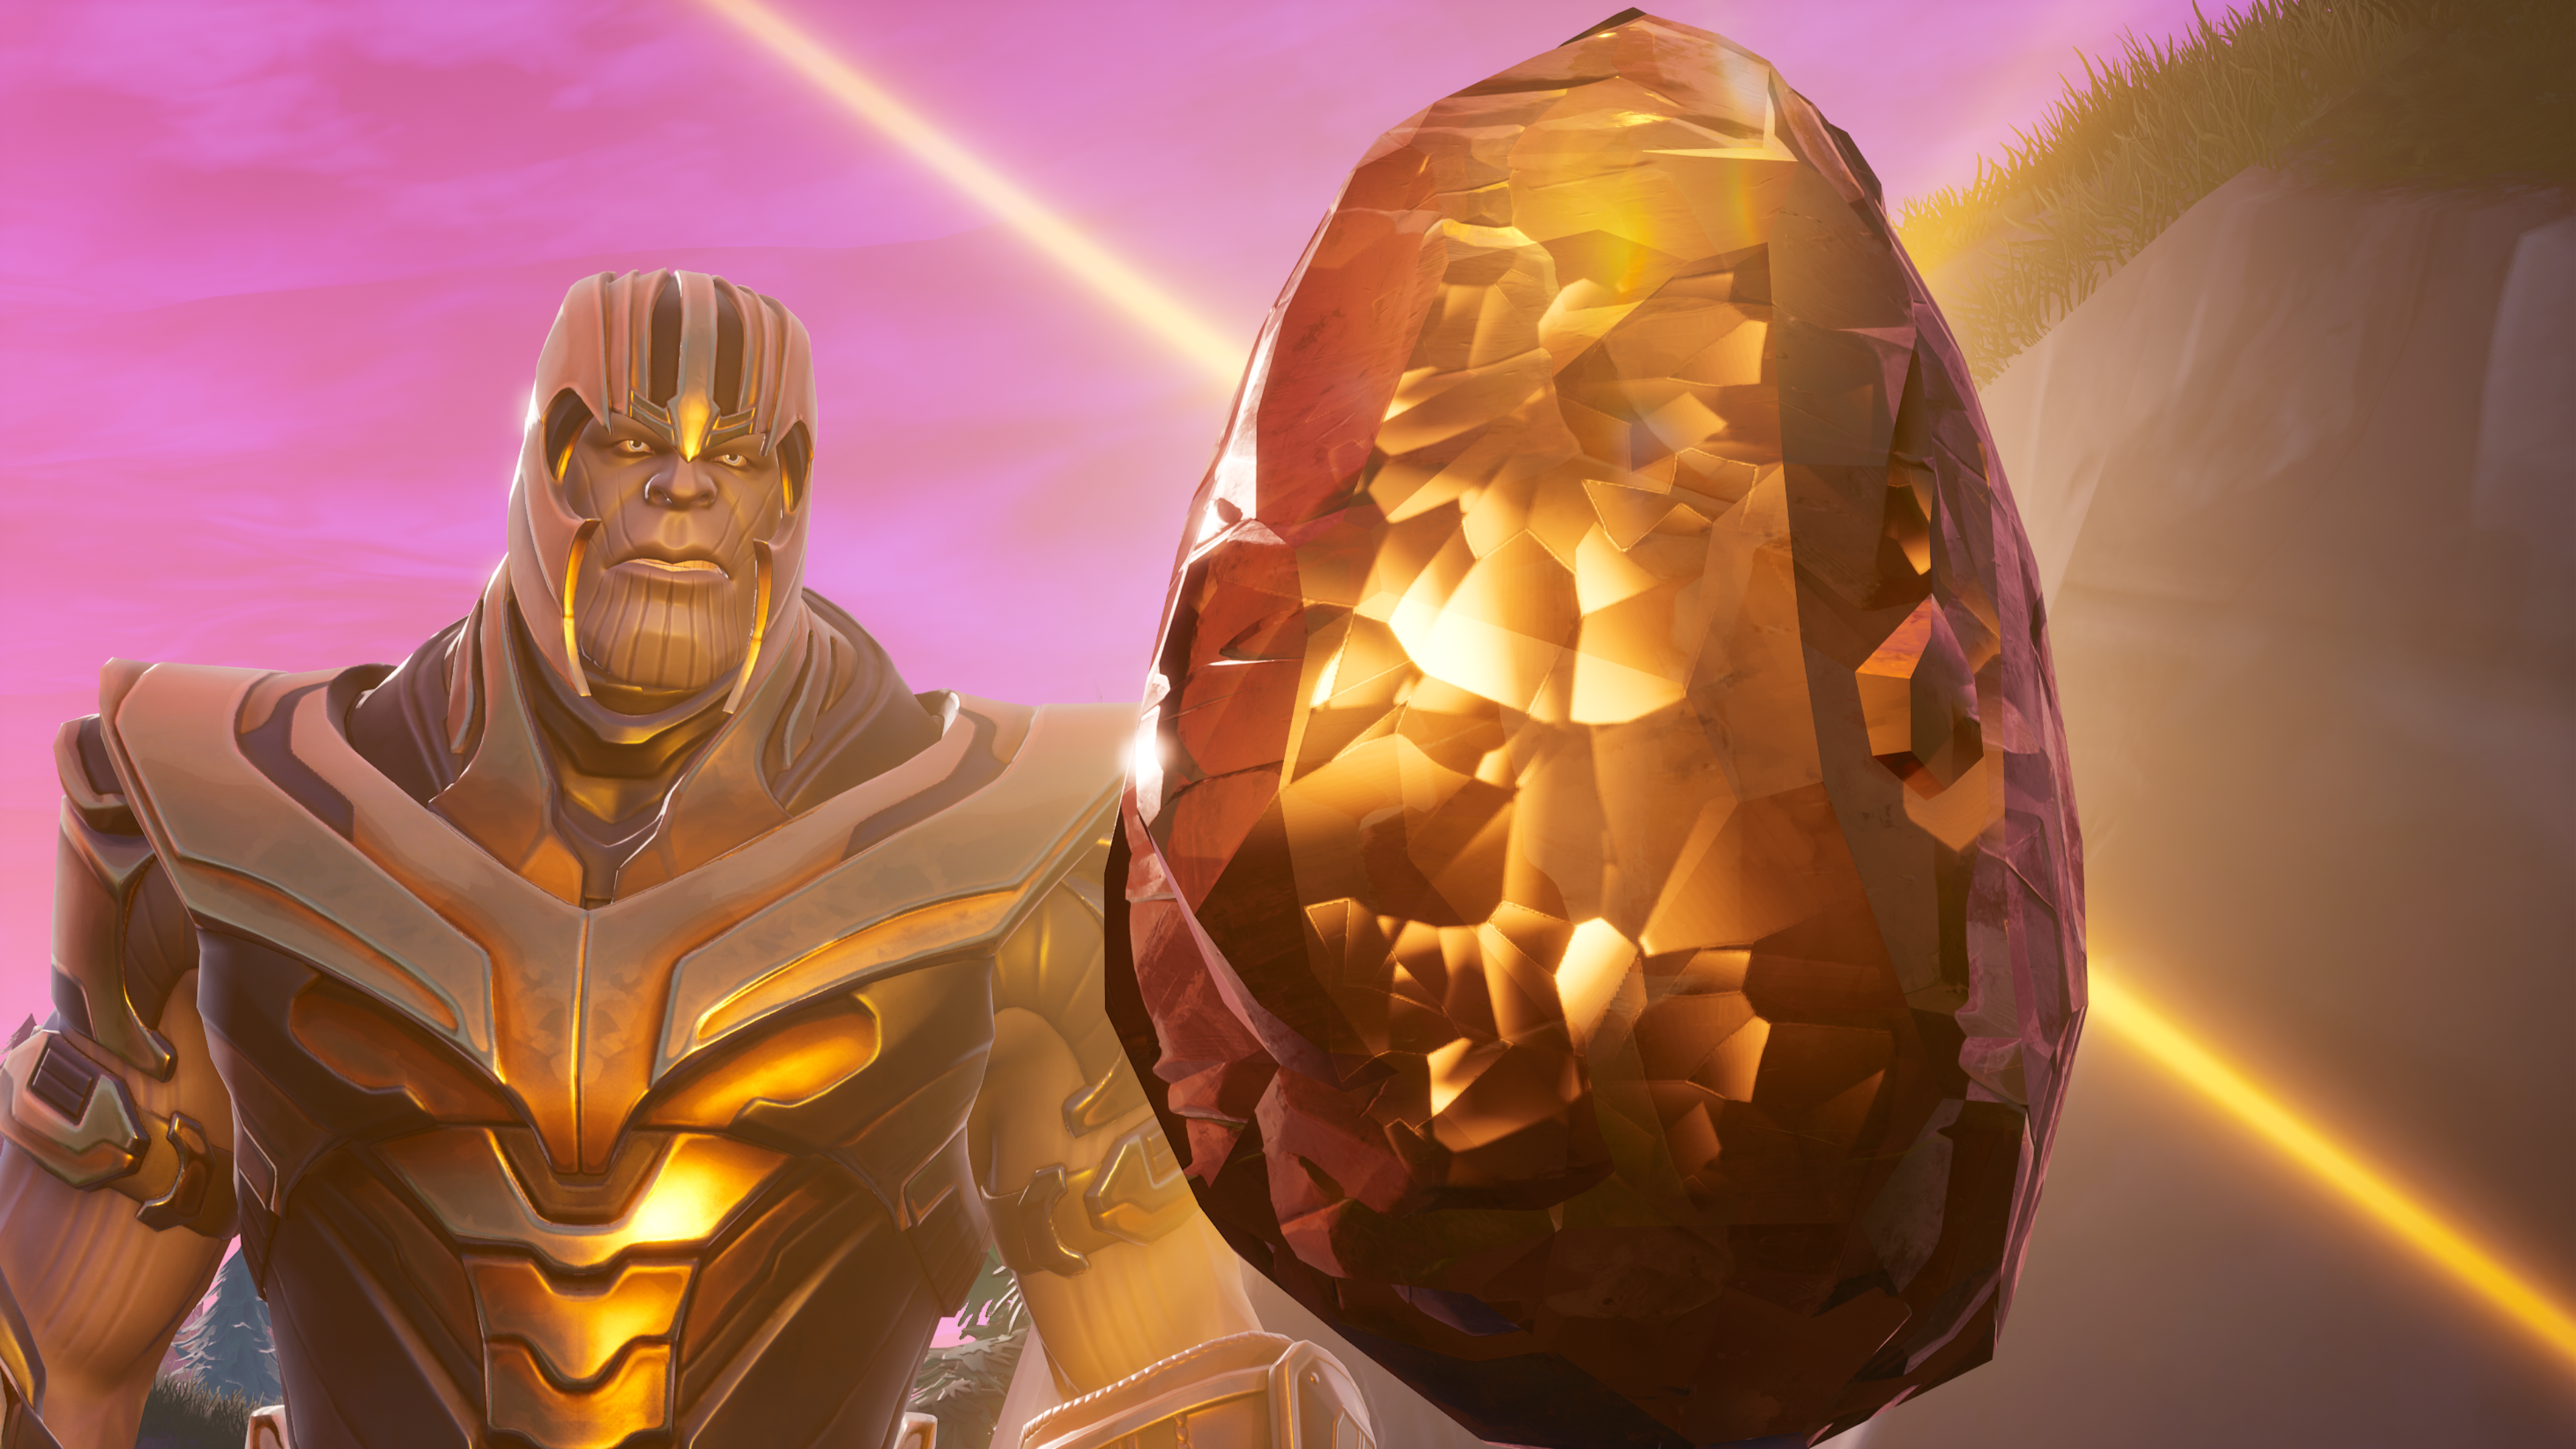 Fortnite Thanos Wallpaper Free Fortnite Thanos Background